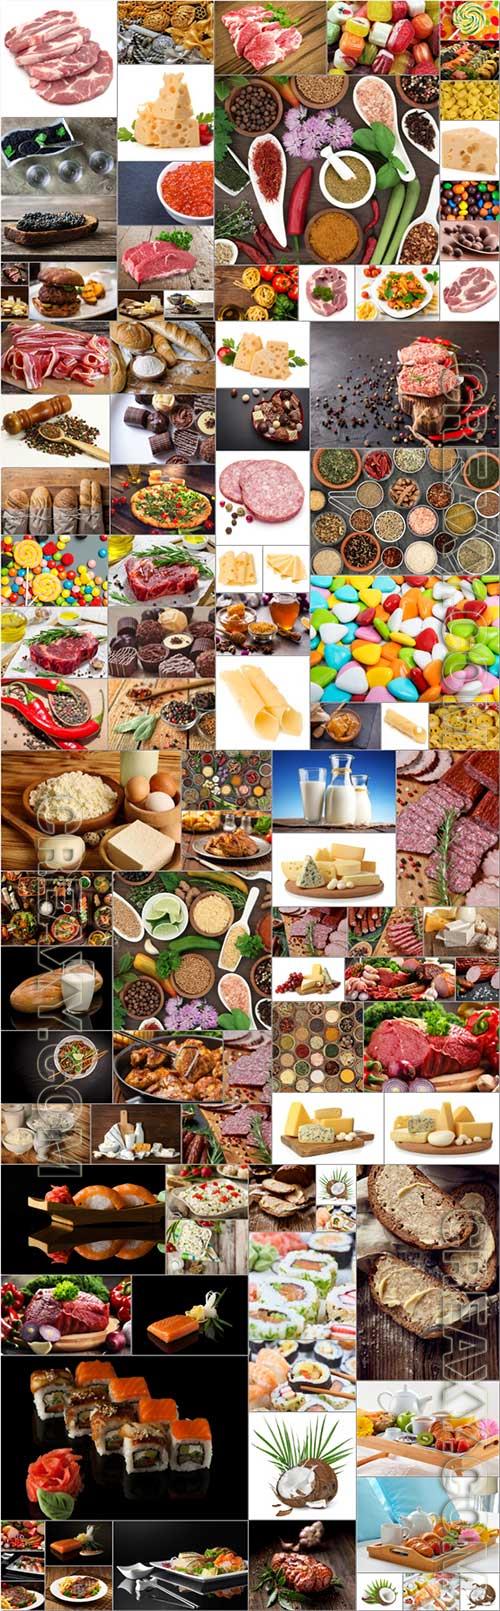 Food, meat, vegetables, fruits, fish, stock photo bundle vol 7